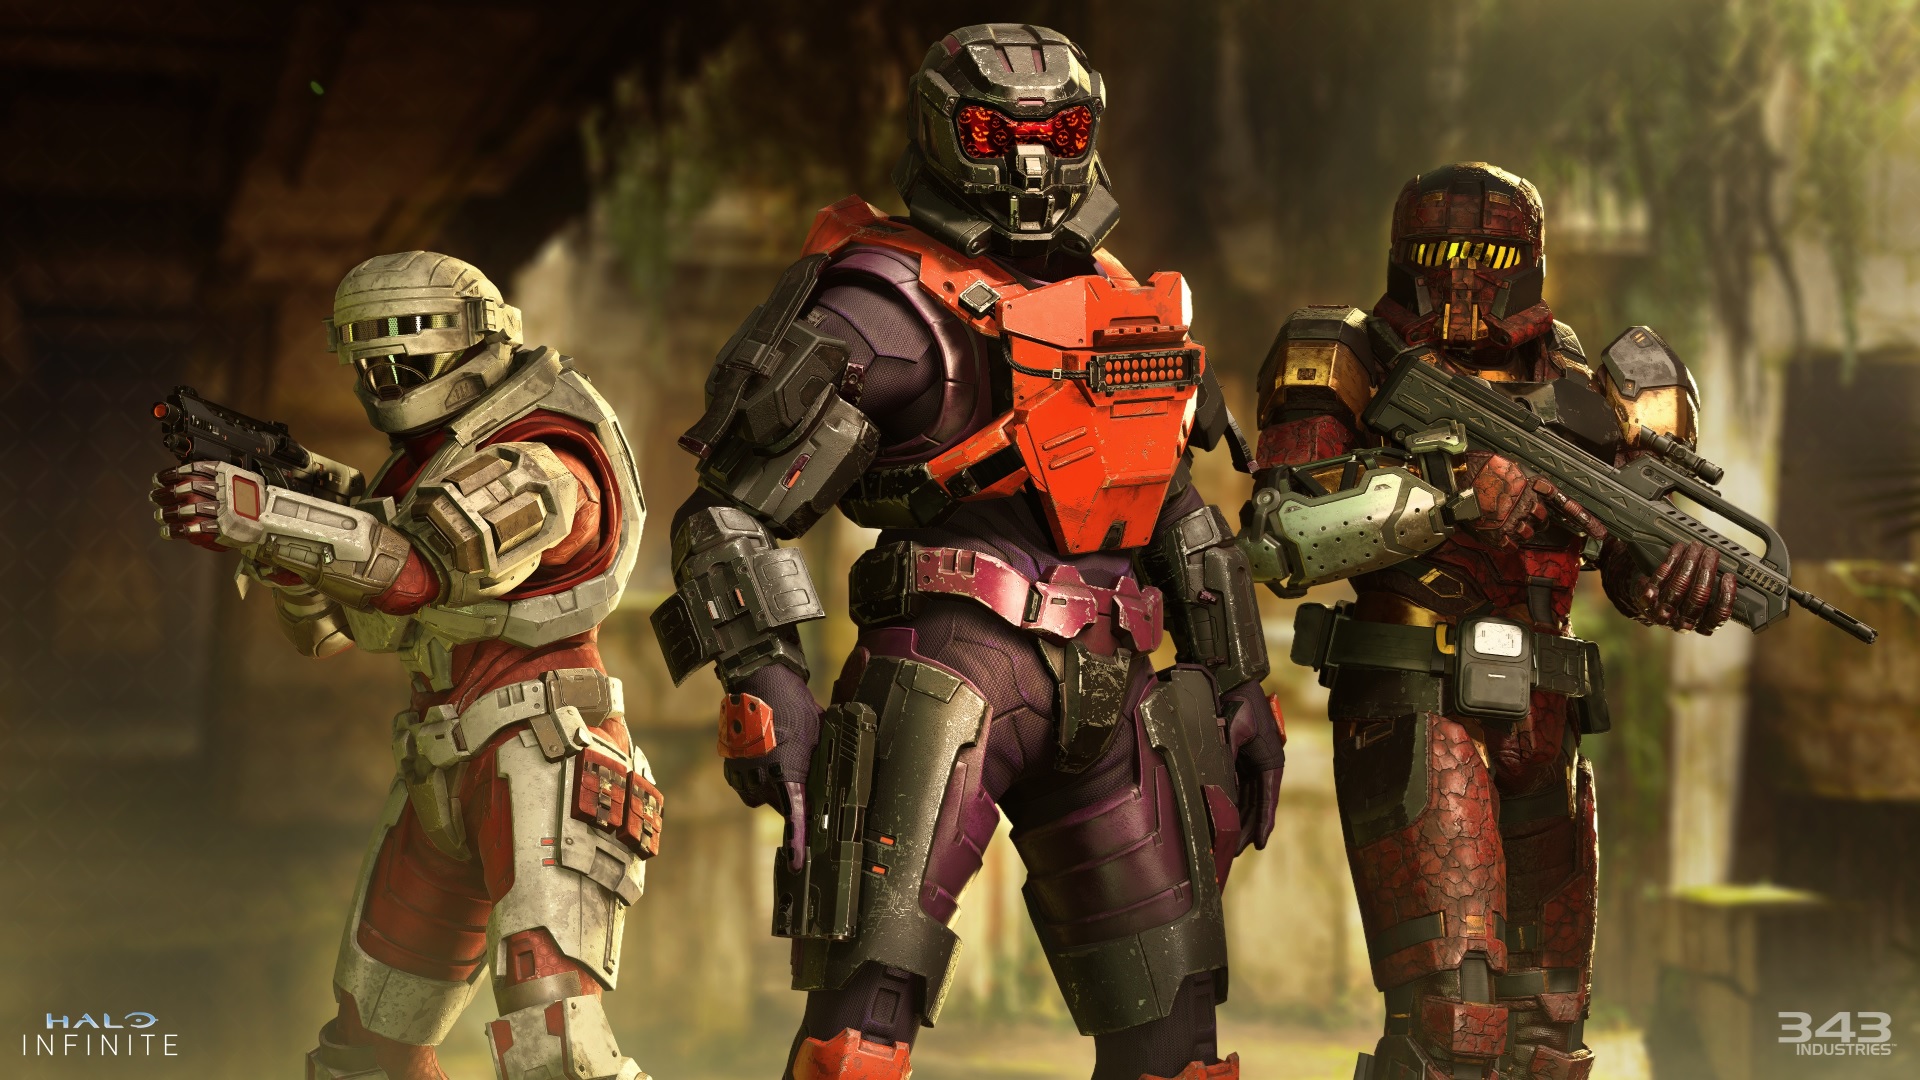 Halo Infinite image of three Spartans in Season 5 armor